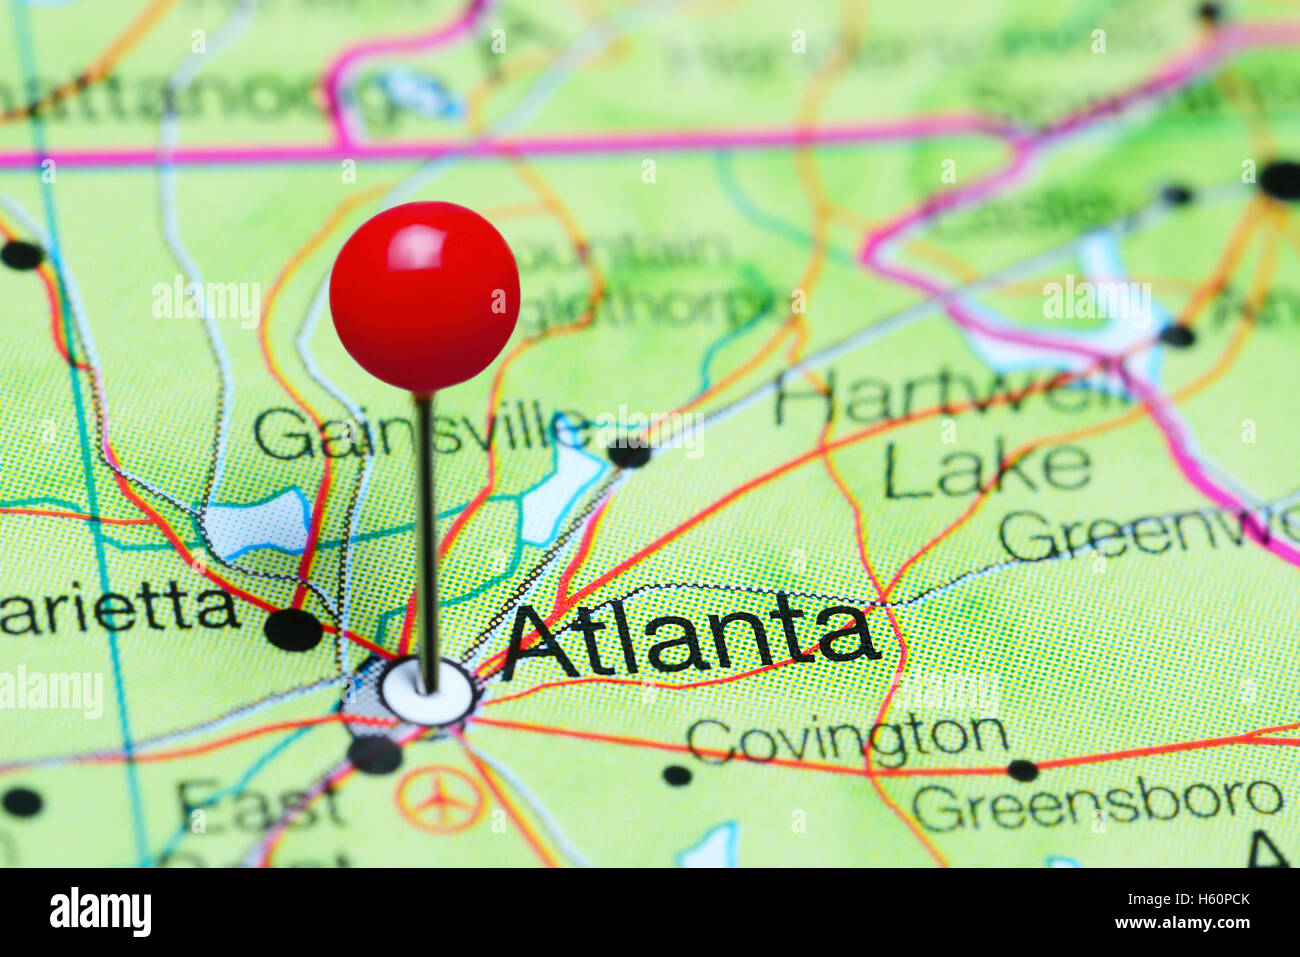 Atlanta On The Map 